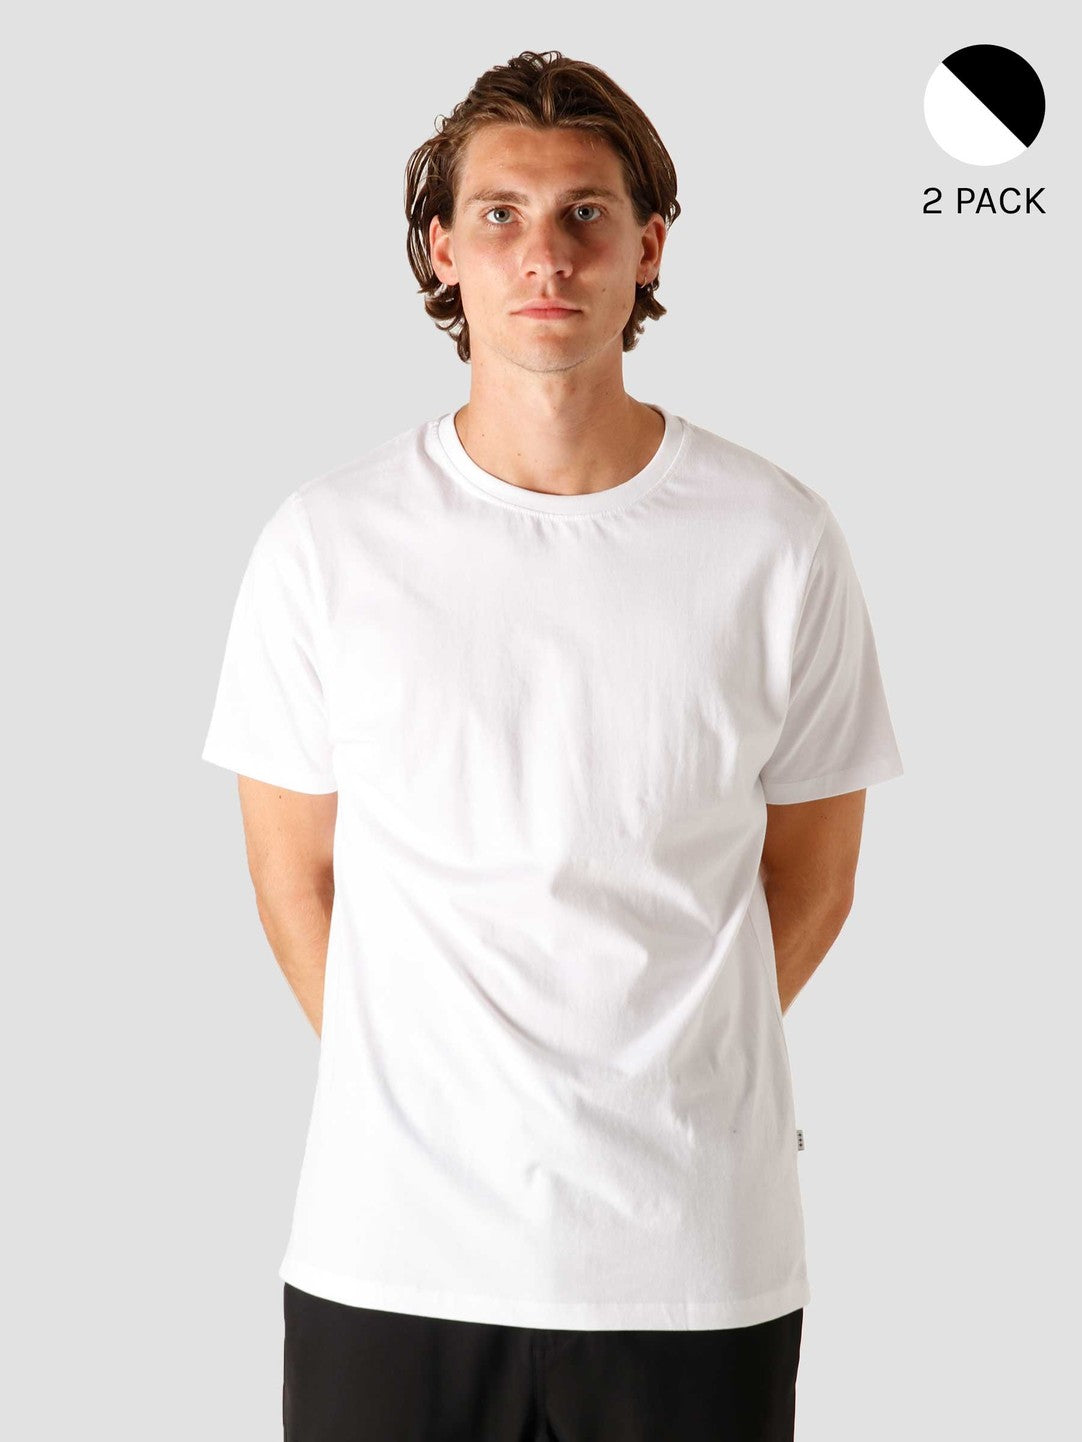 2-Pack QB01 Mix T-shirt Black and White